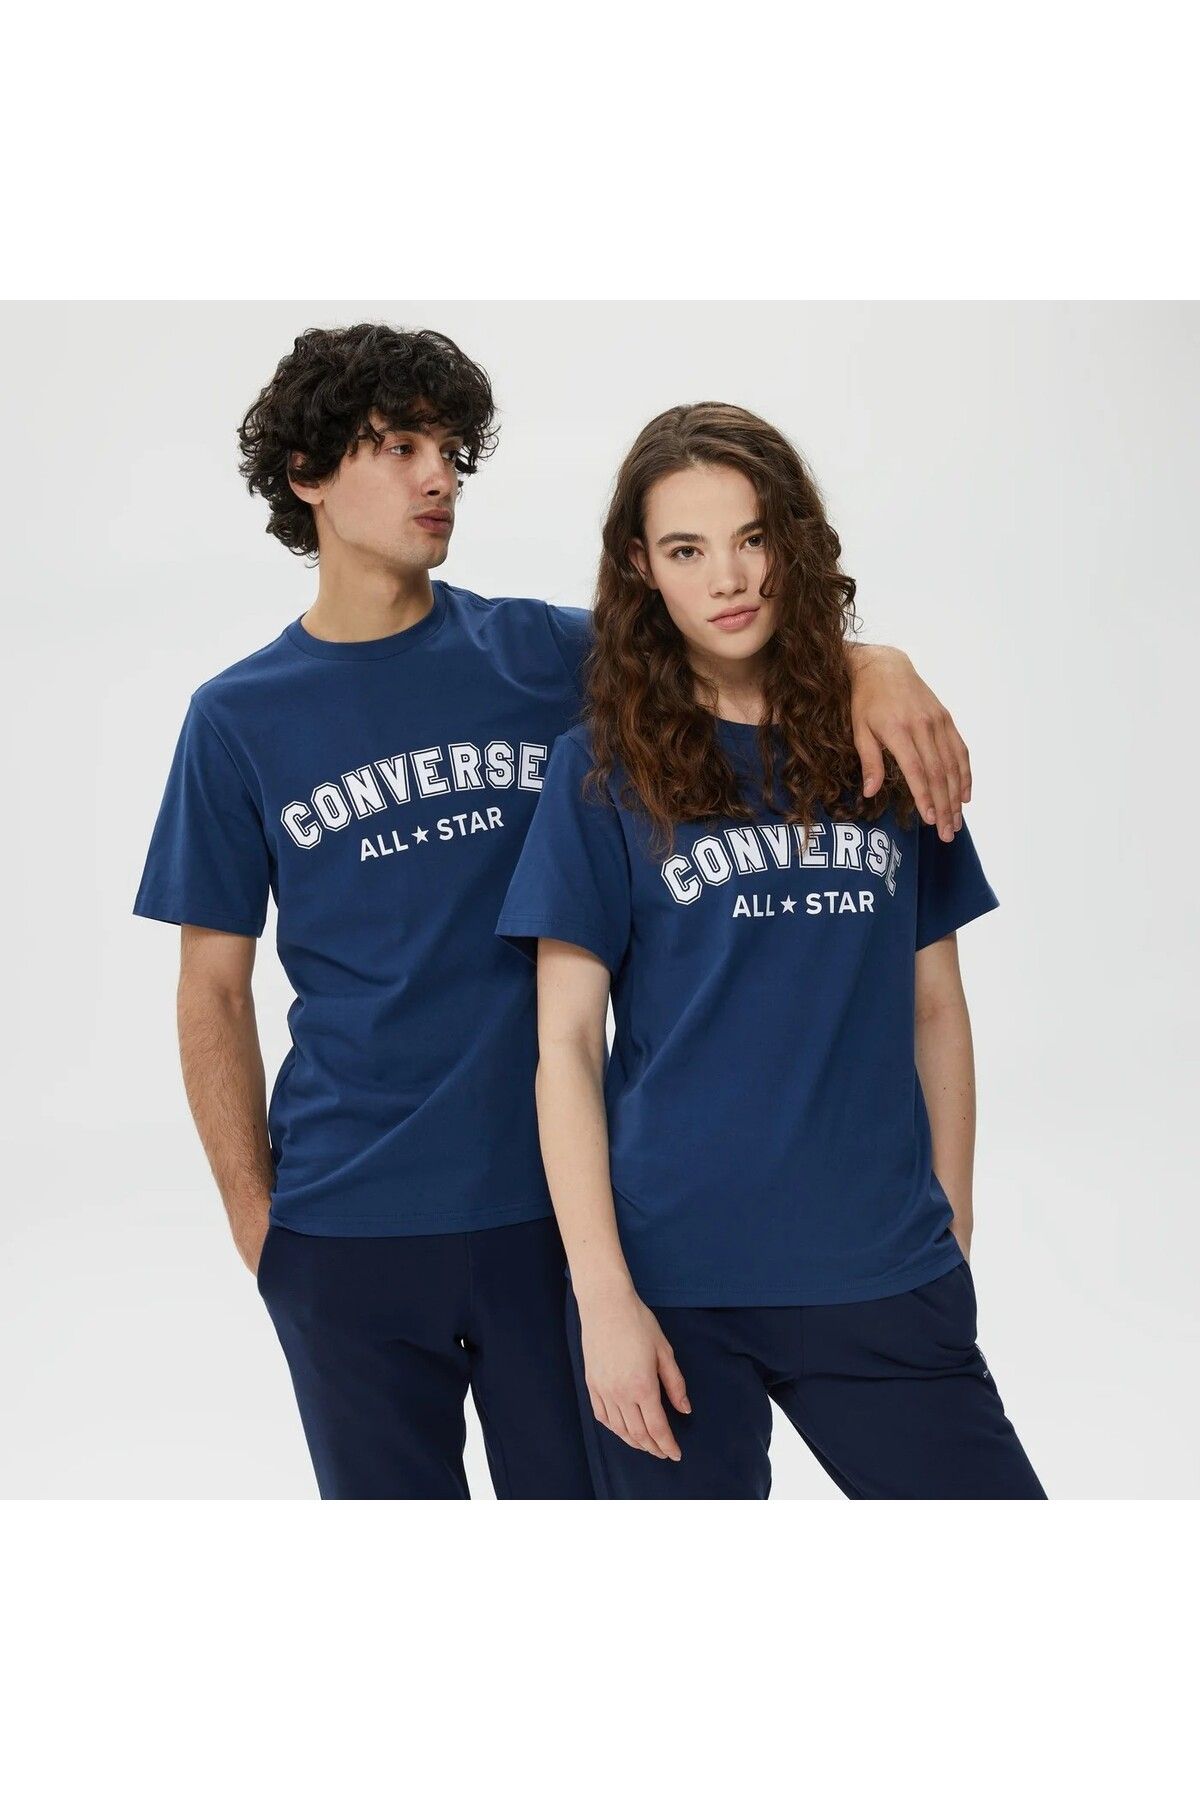 Converse Classic Fit All Star Center Front Unisex Lacivert T-Shirt